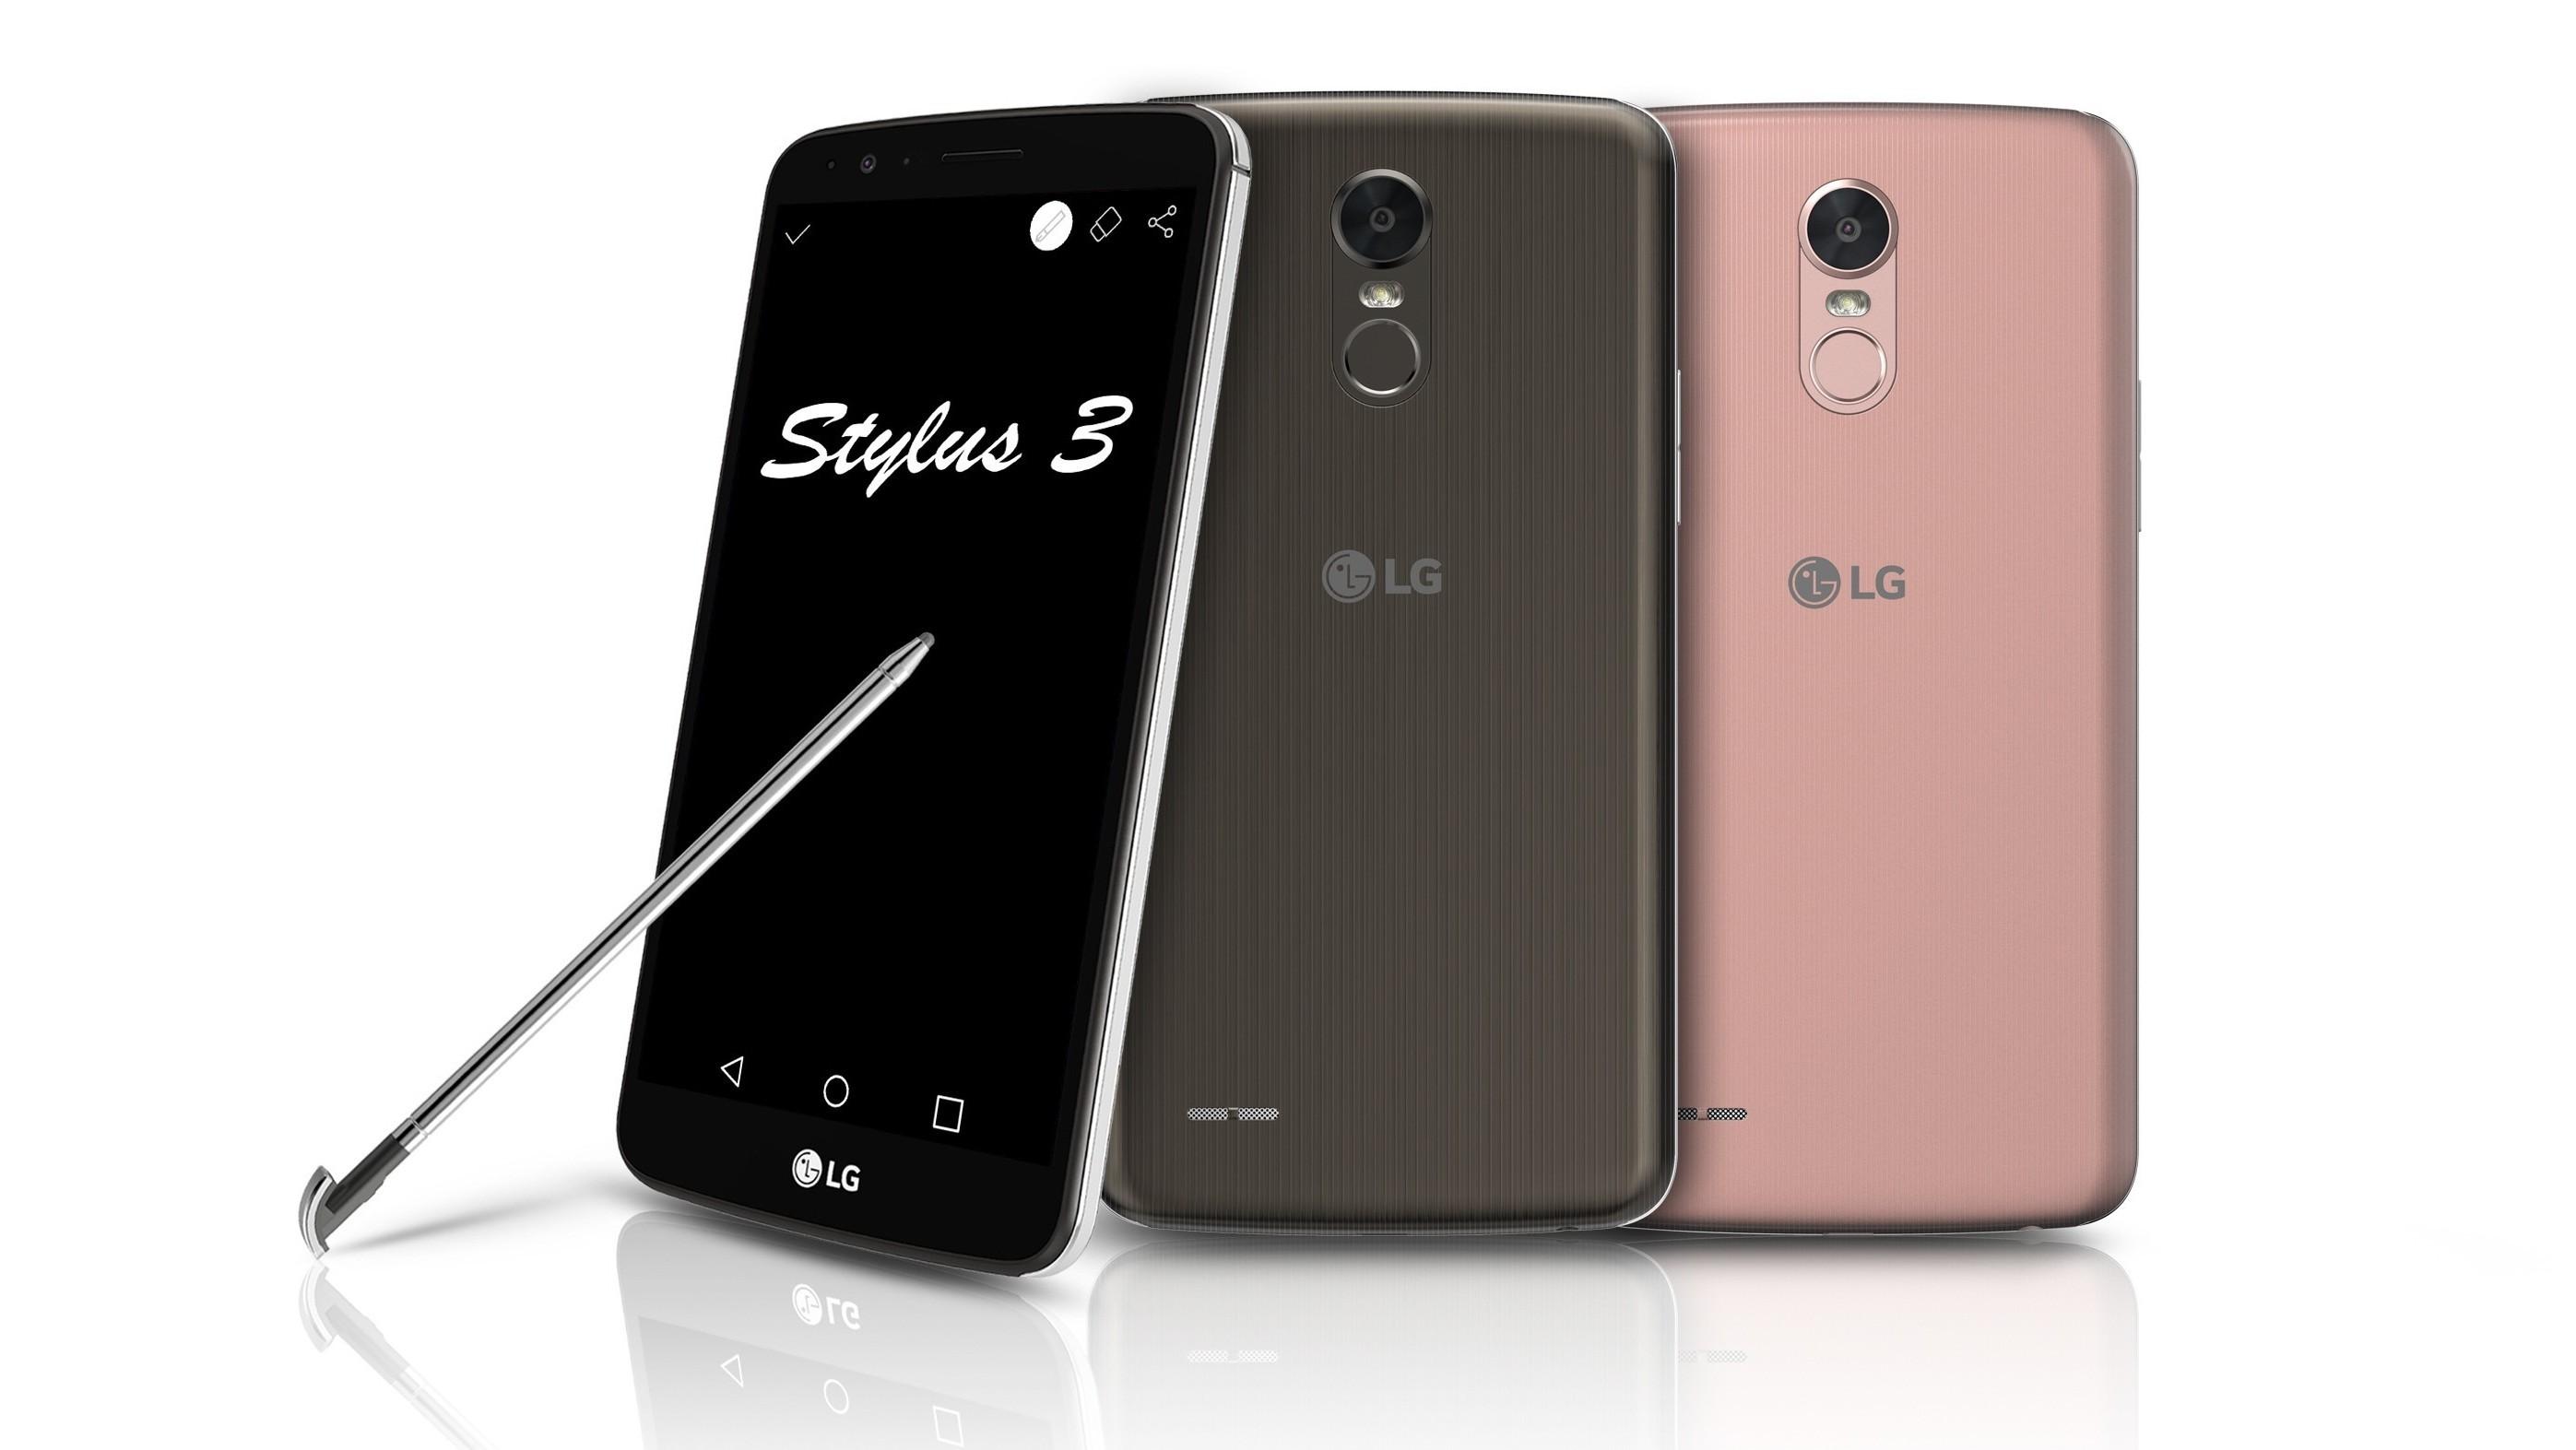 LG Stylus 3.